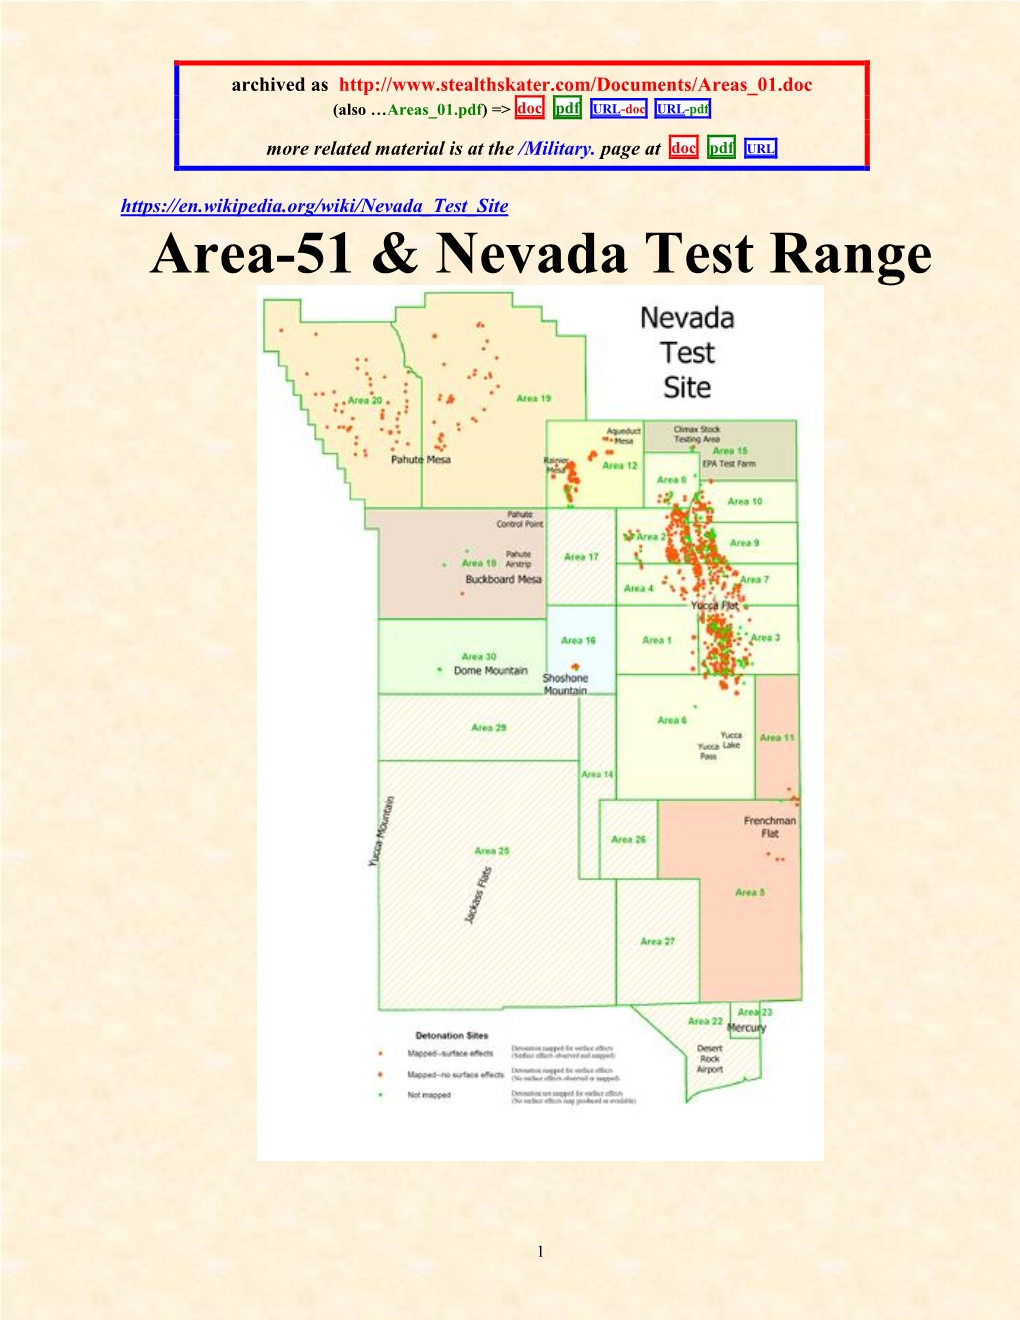 Area-51 & Nevada Test Range